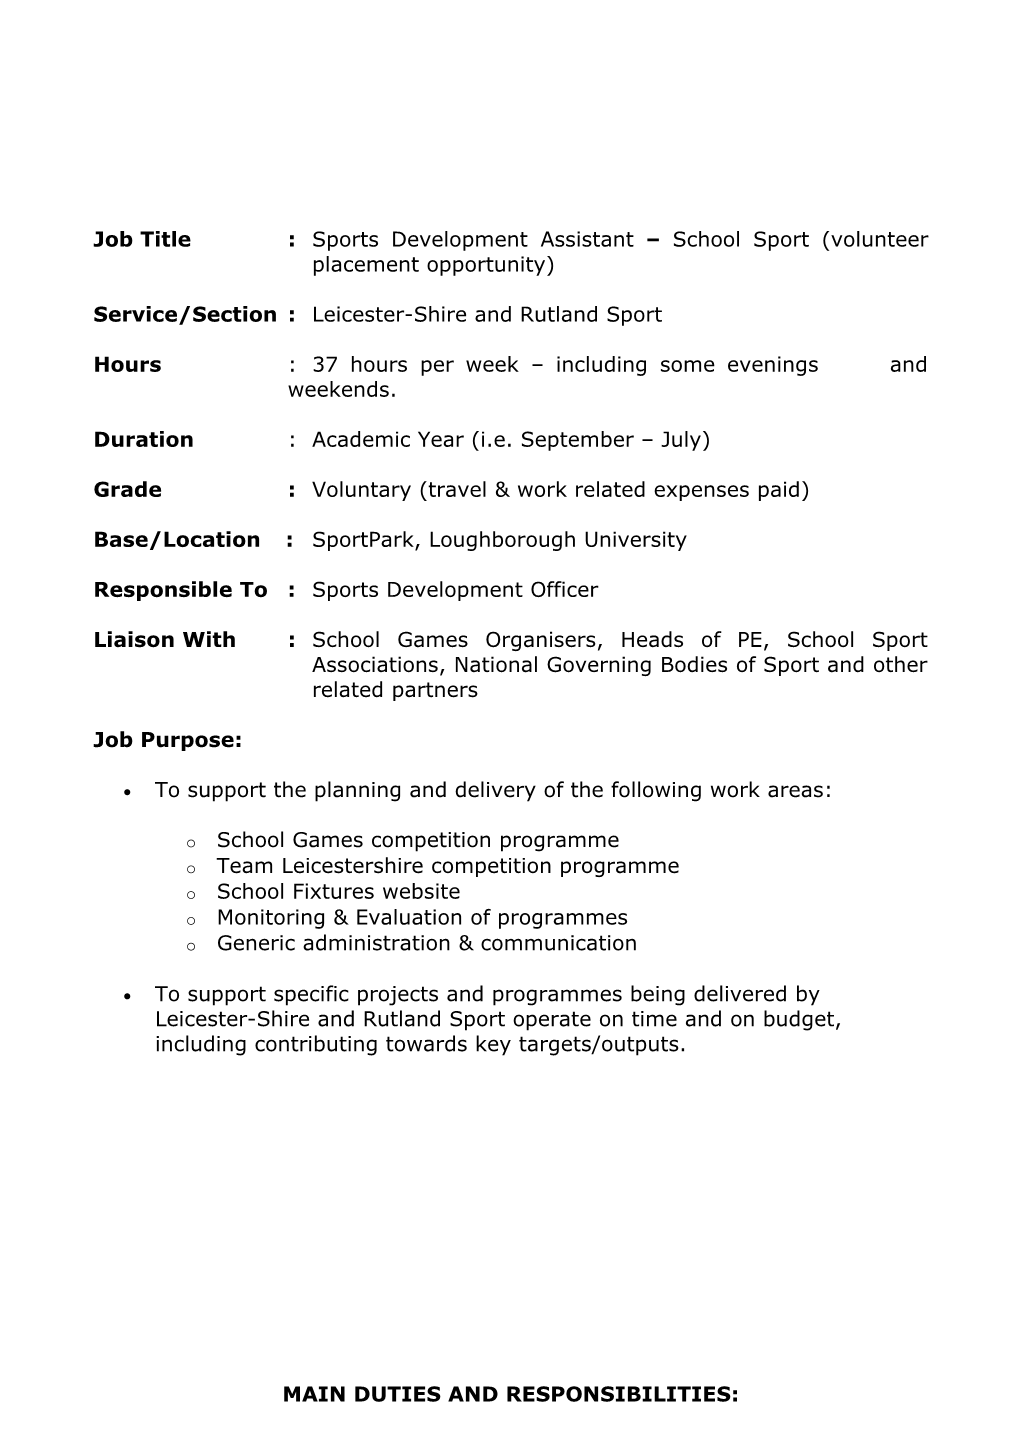 Job Title : Sports Development Assistant School Sport (Volunteer Placement Opportunity)